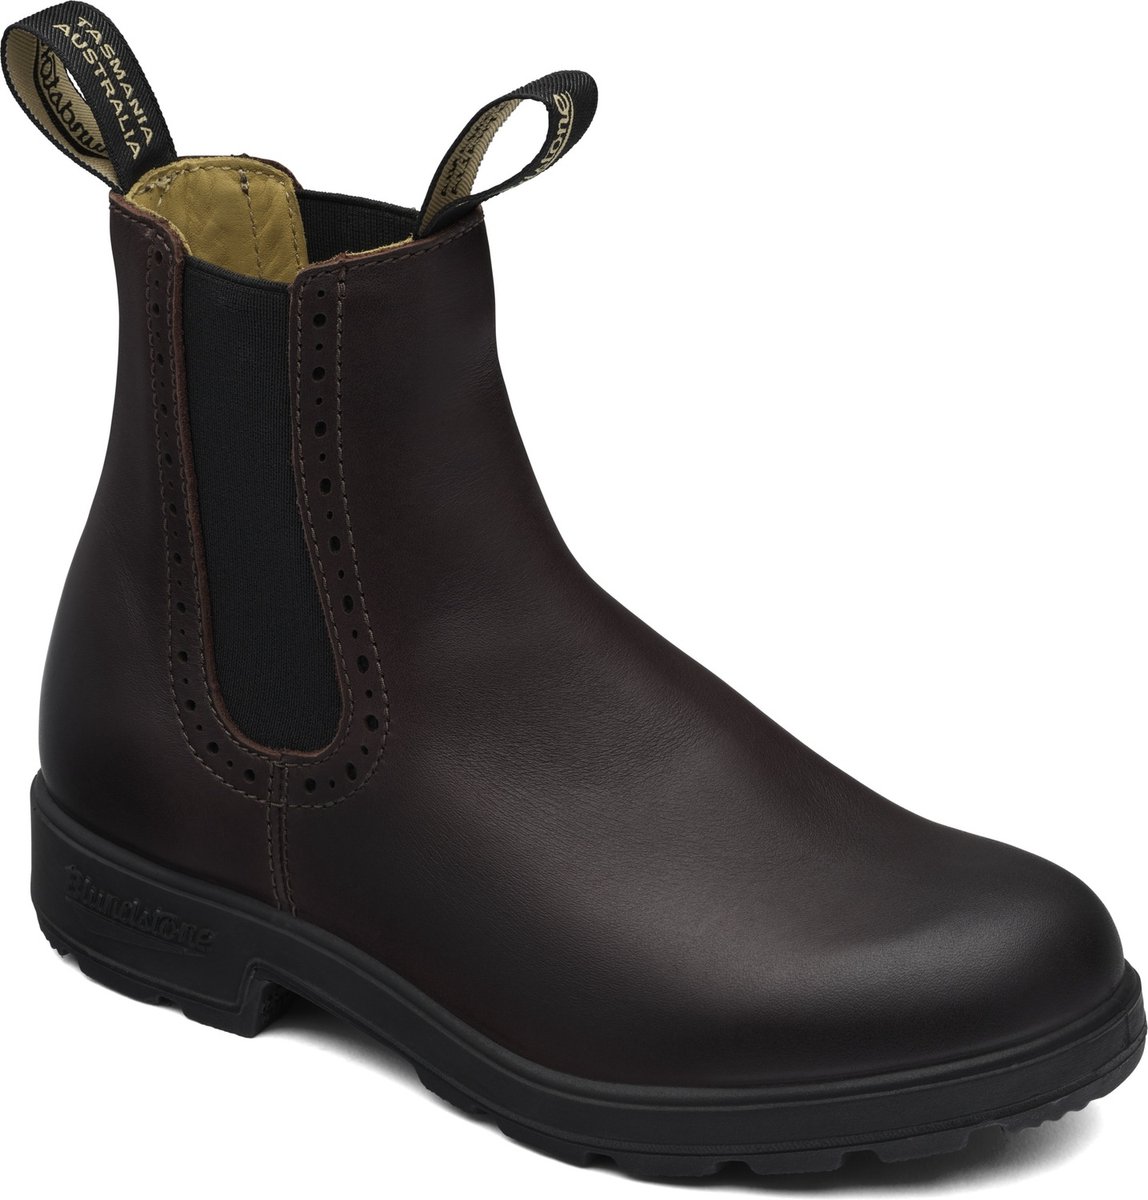 Blundstone Damen Stiefel Boots #1352 Brogued Leather (Women's Series) Shiraz-5.5UK